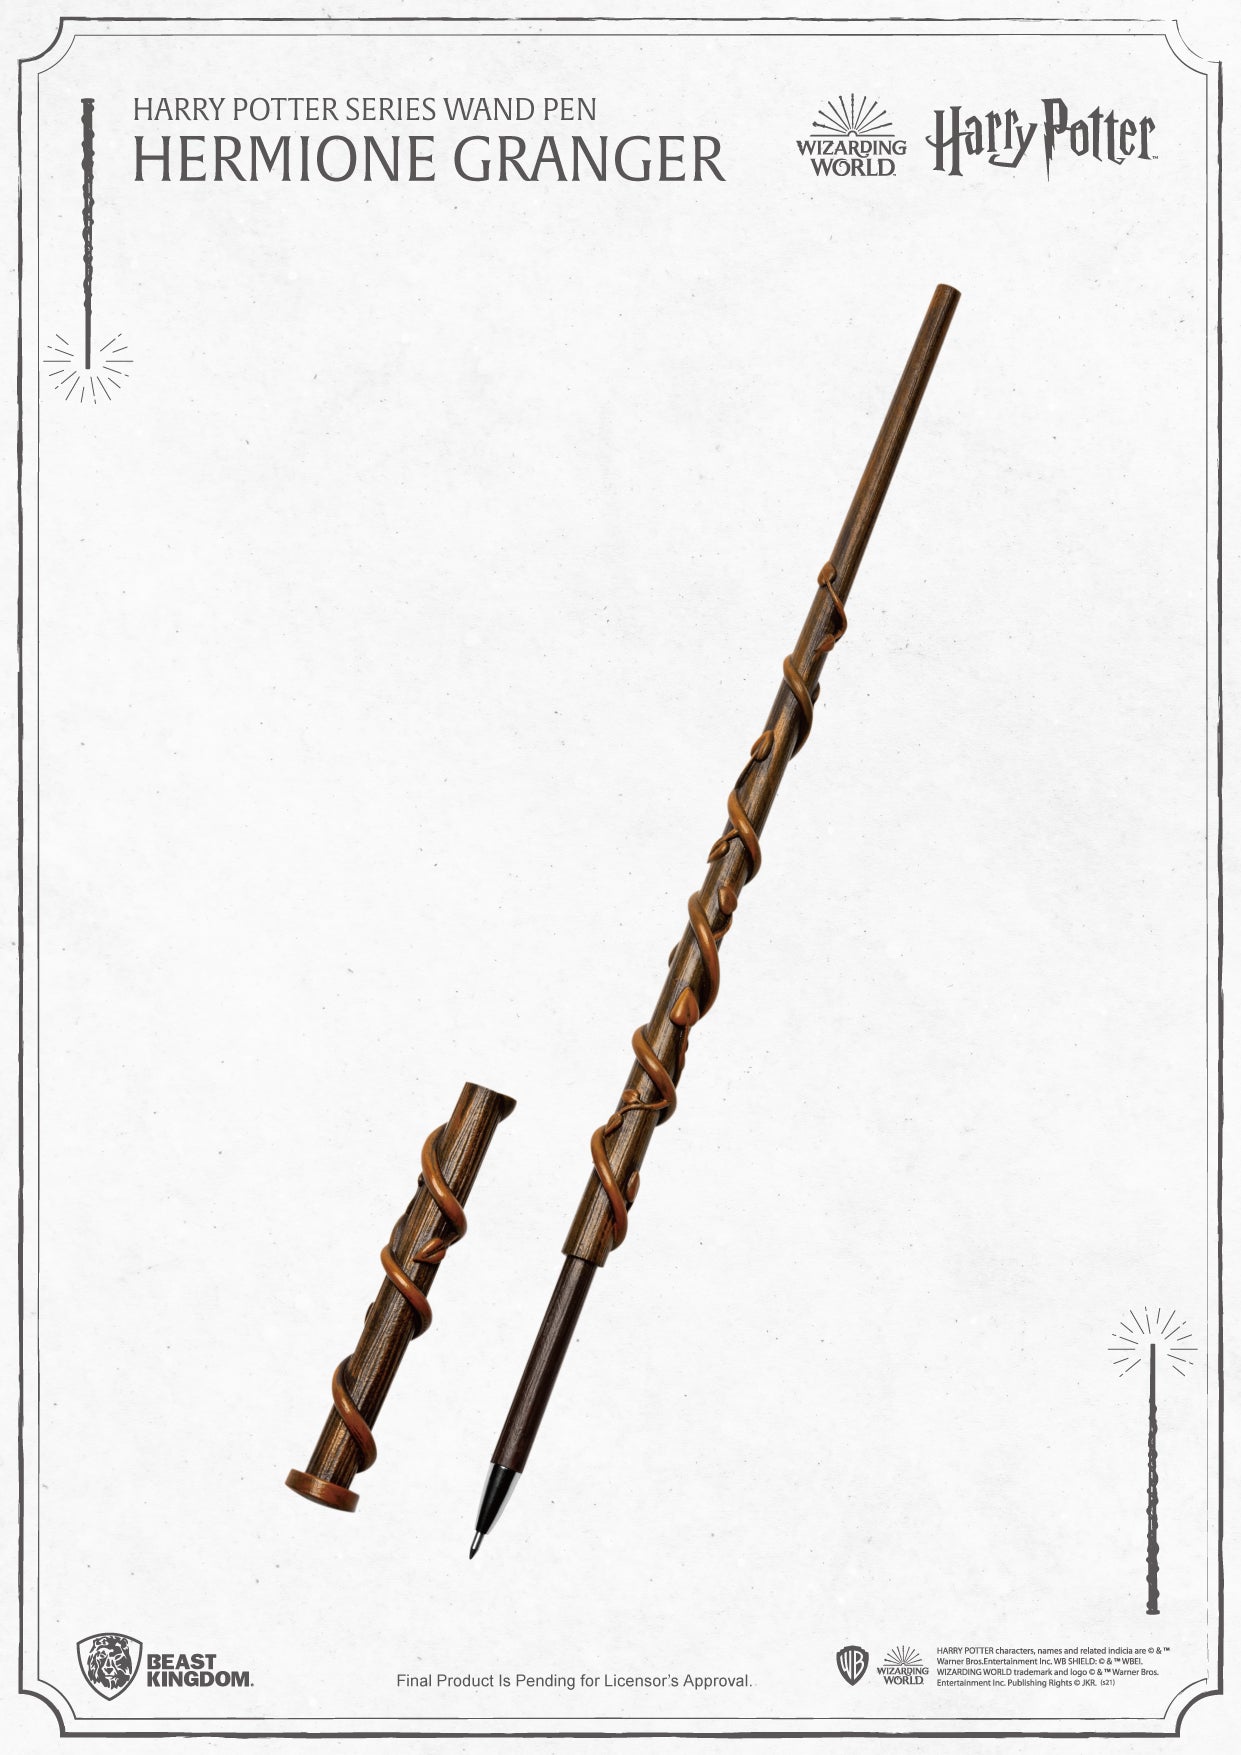 Pre-Order Harry Potter Series Wand Pen - Hermione Granger